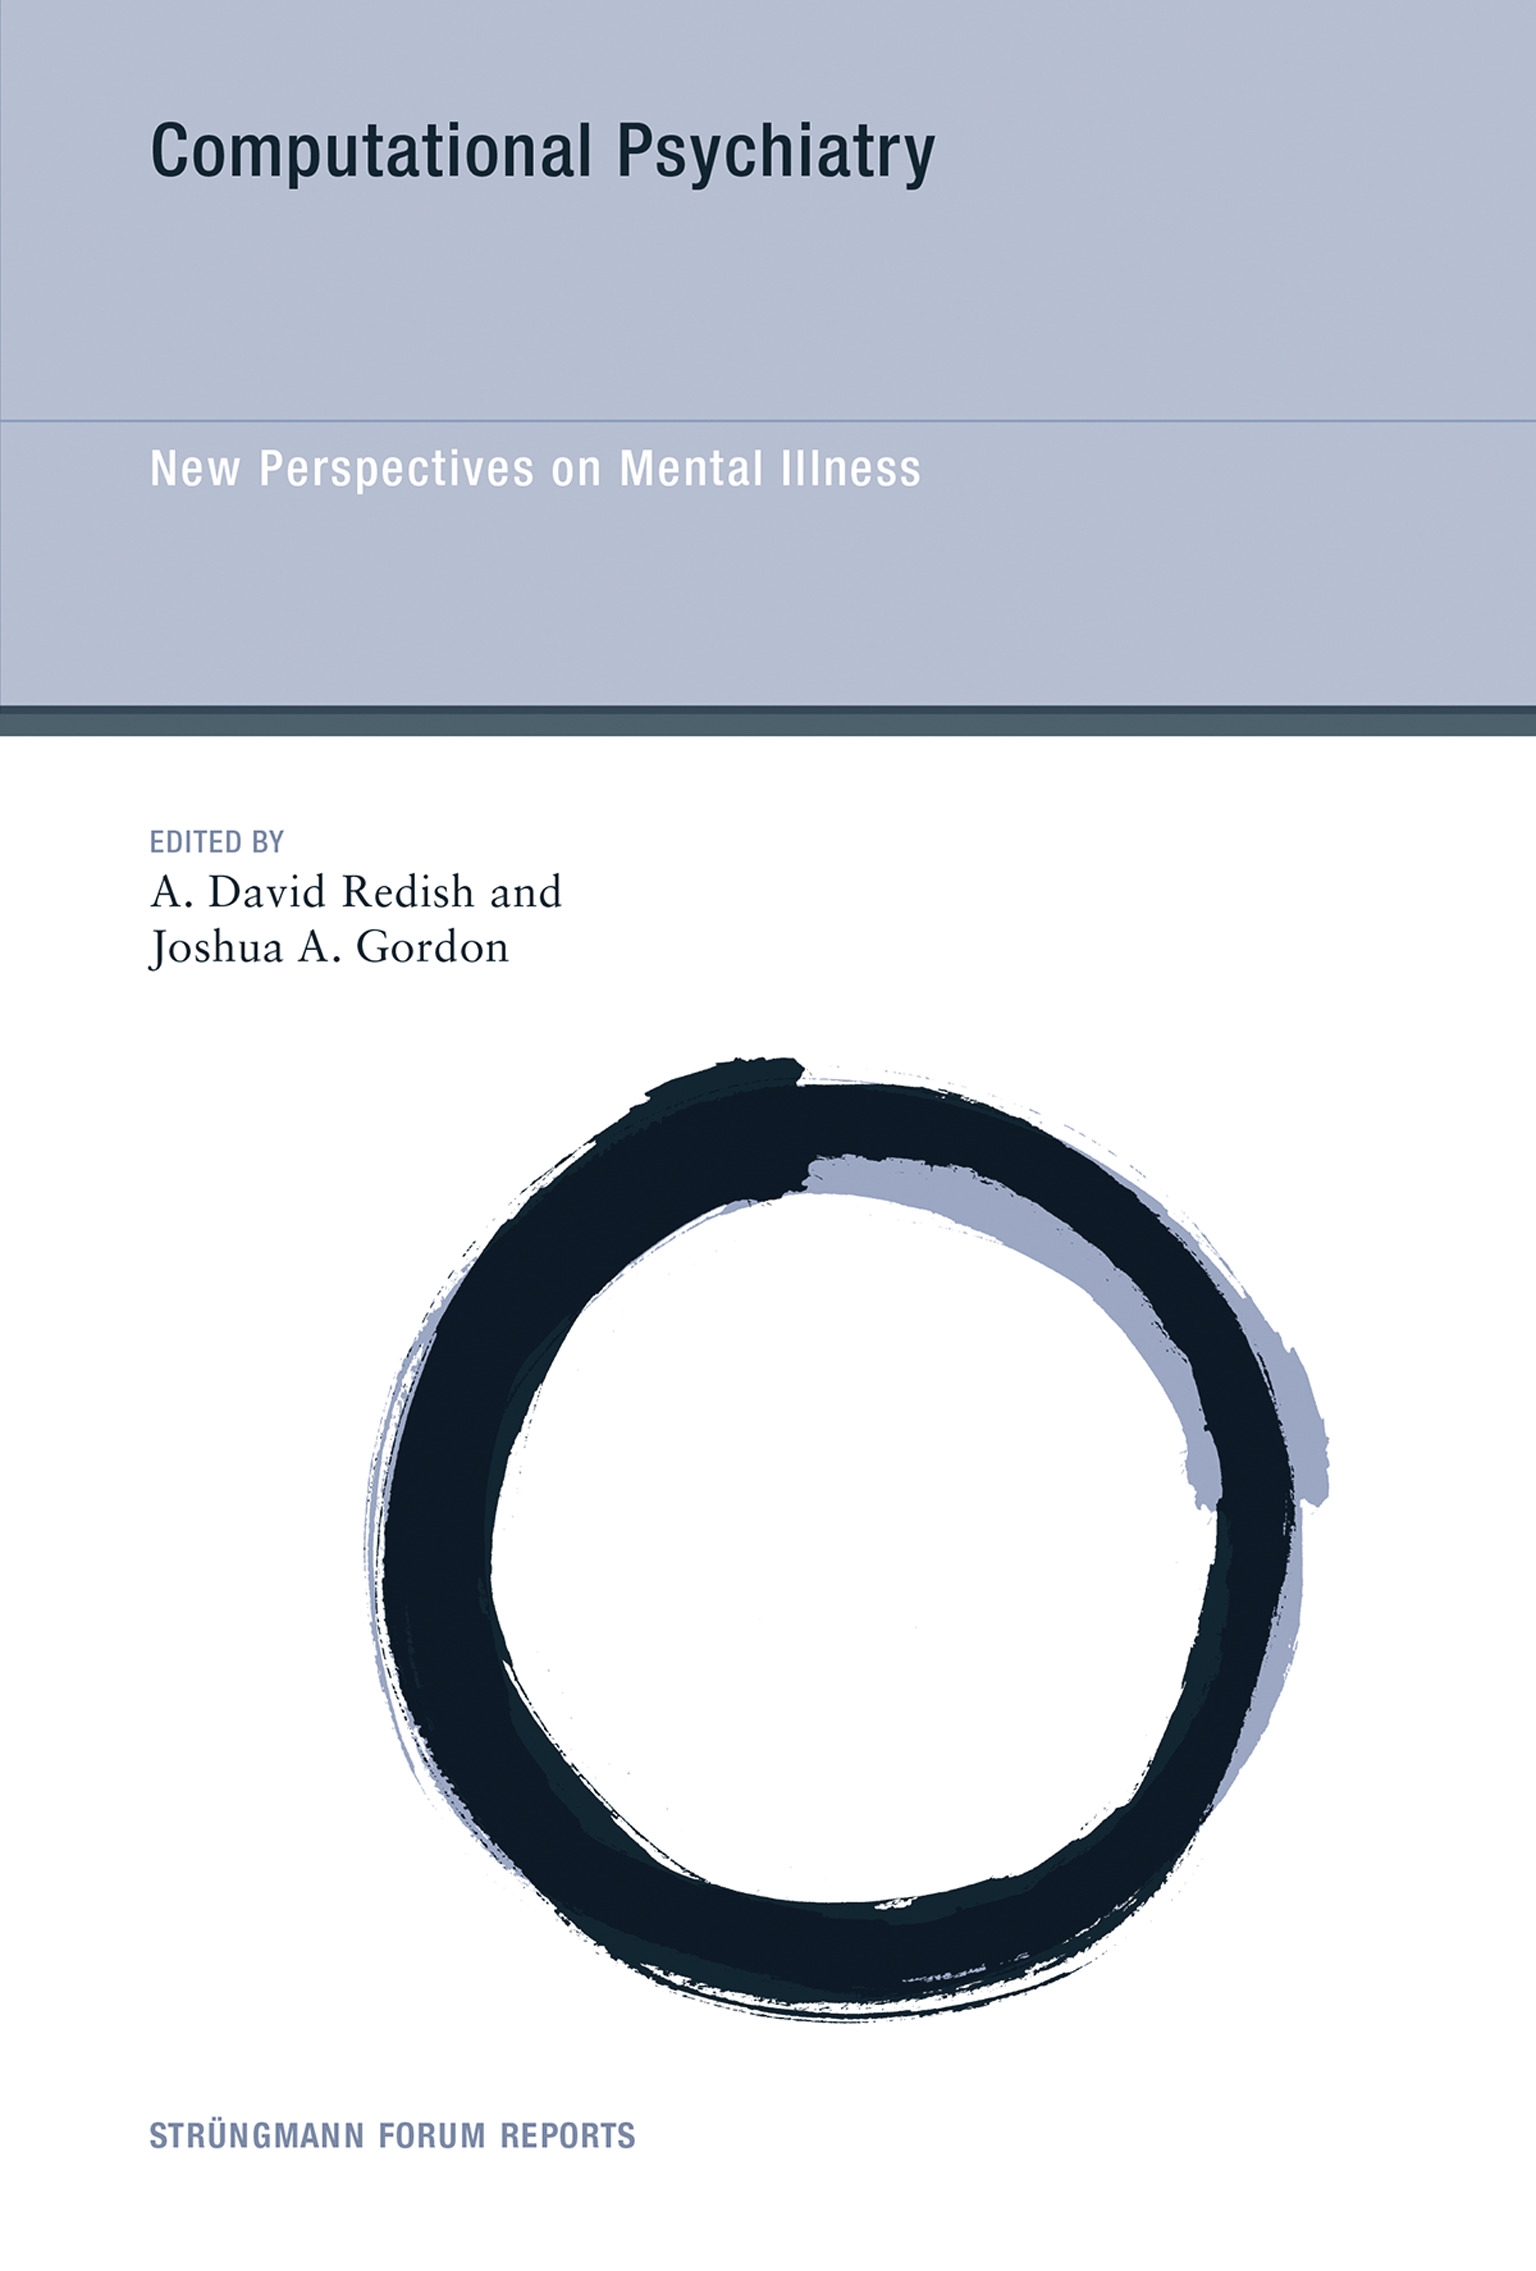 Computational Psychiatry by A. David Redish Penguin Books New Zealand